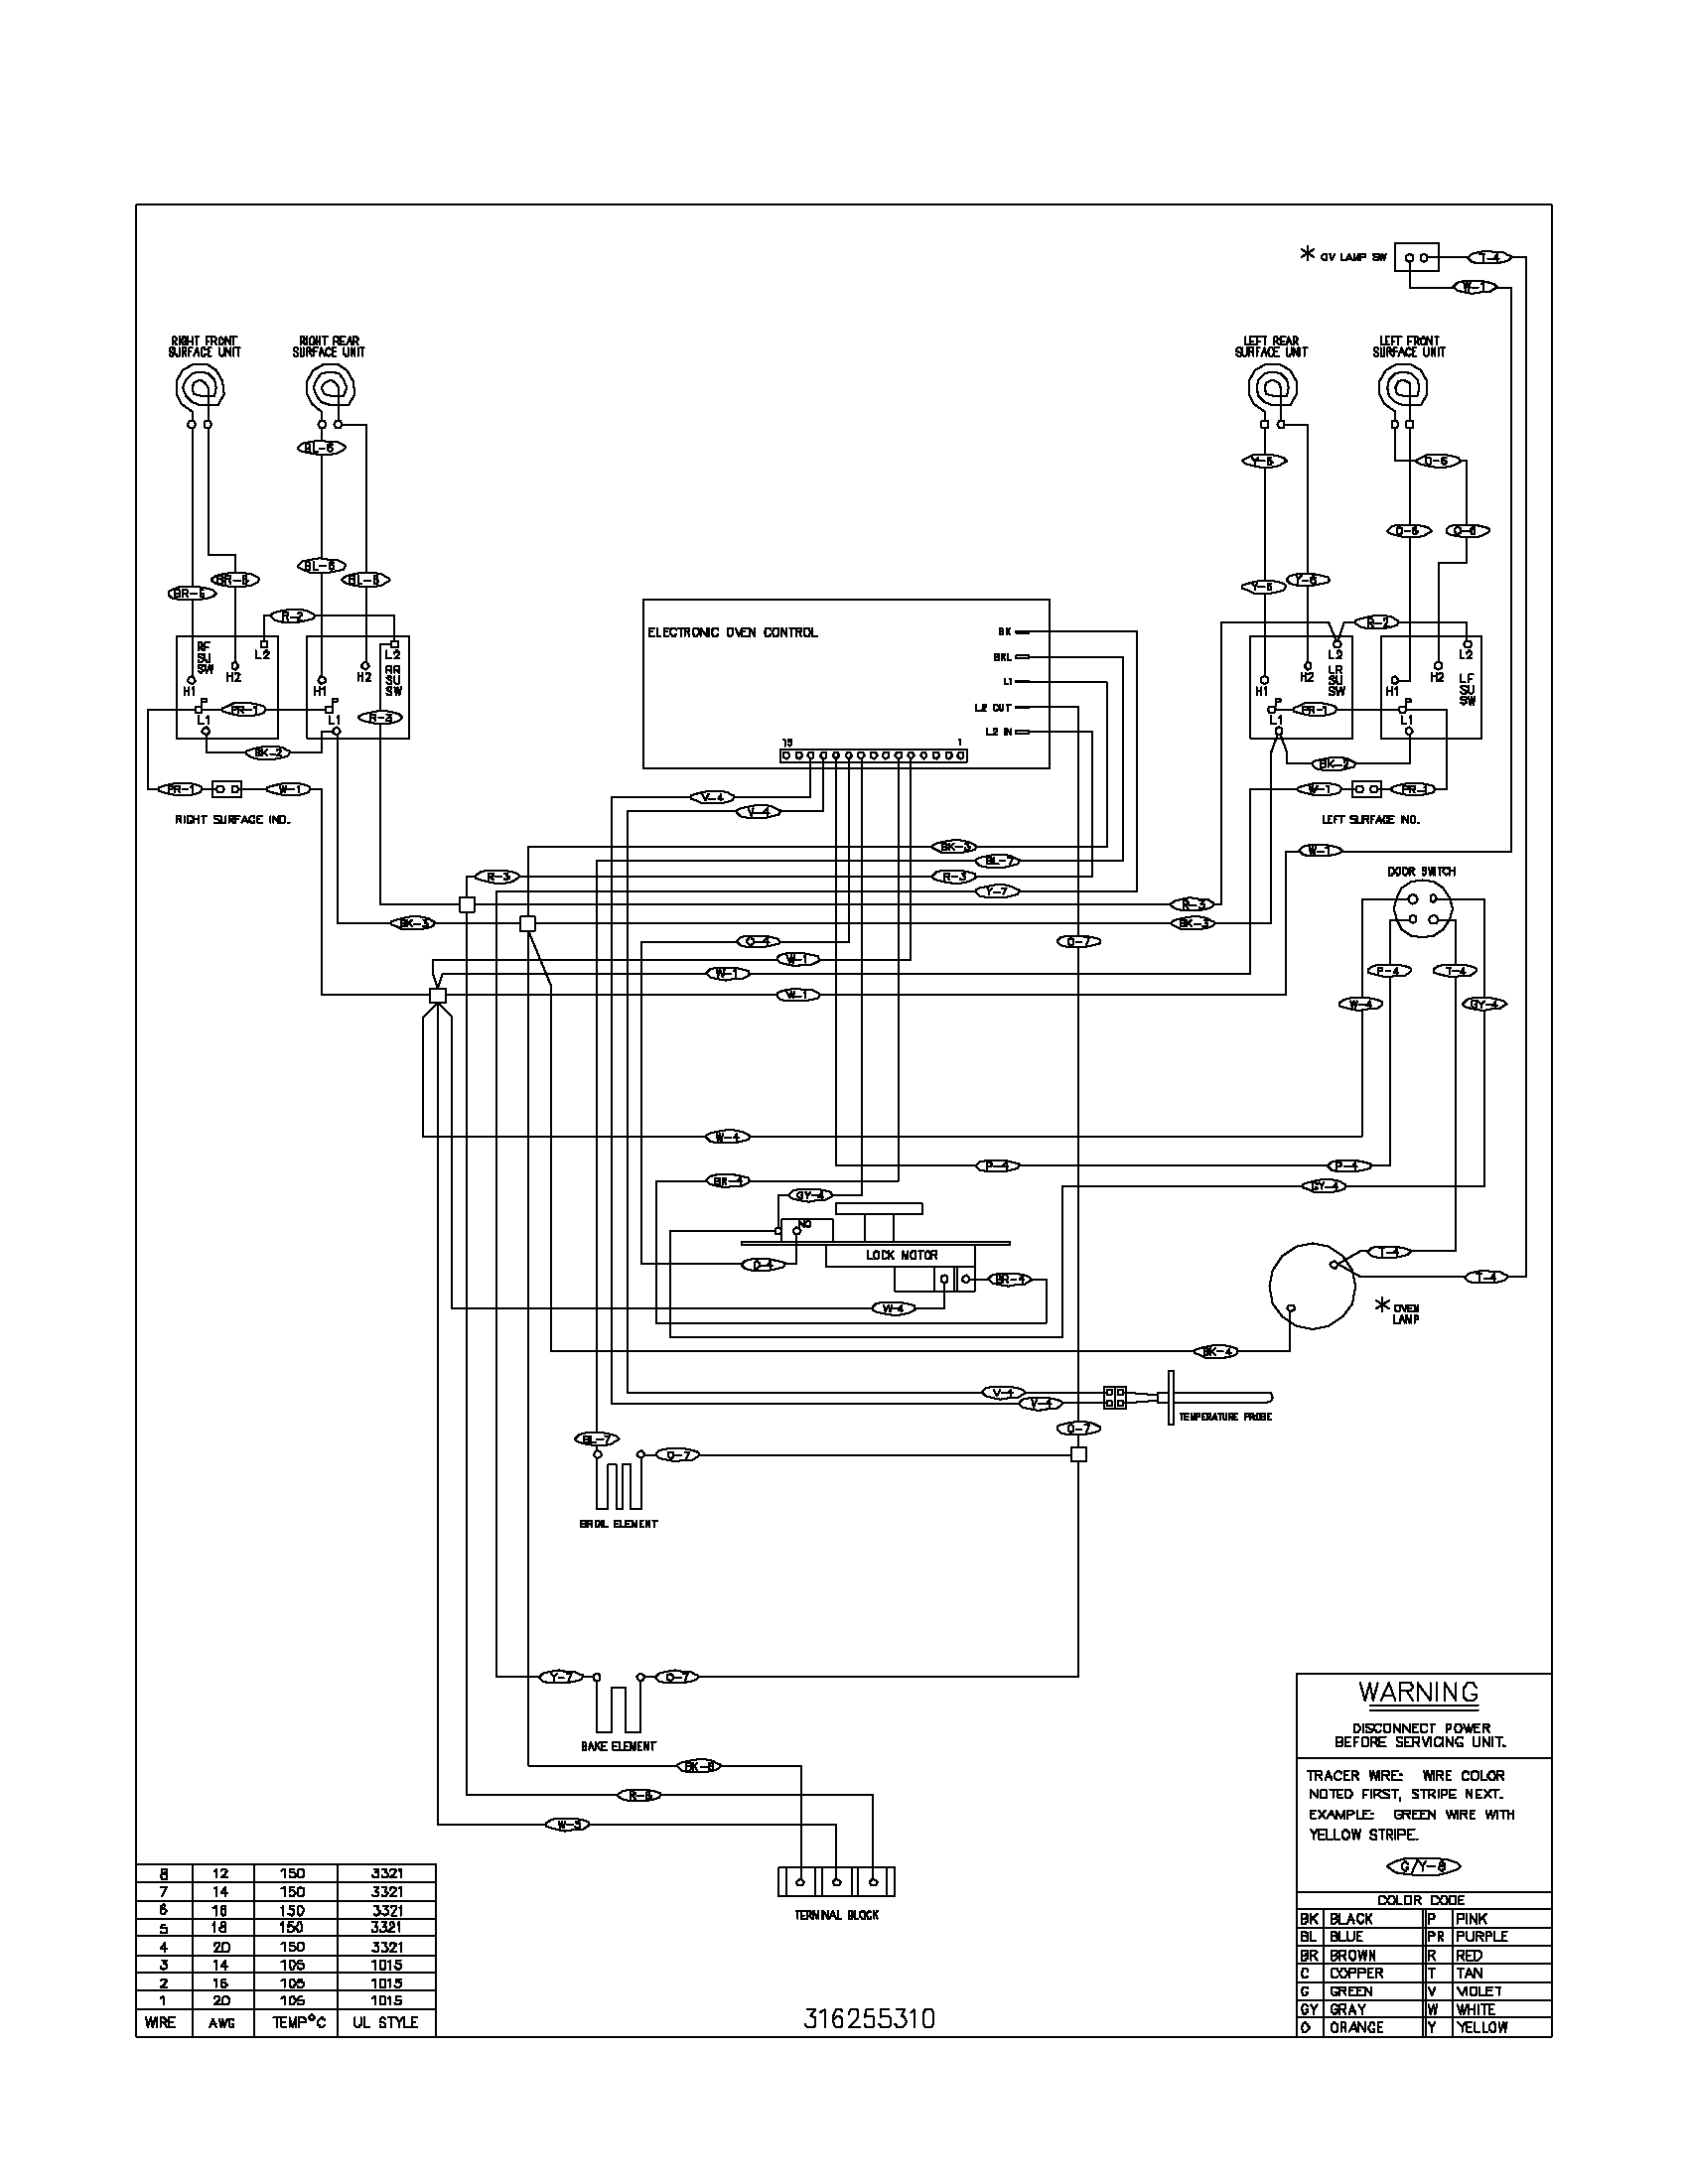 Infinite Switch Wiring Diagram | Wiring Diagram - Infinite Switch Wiring Diagram